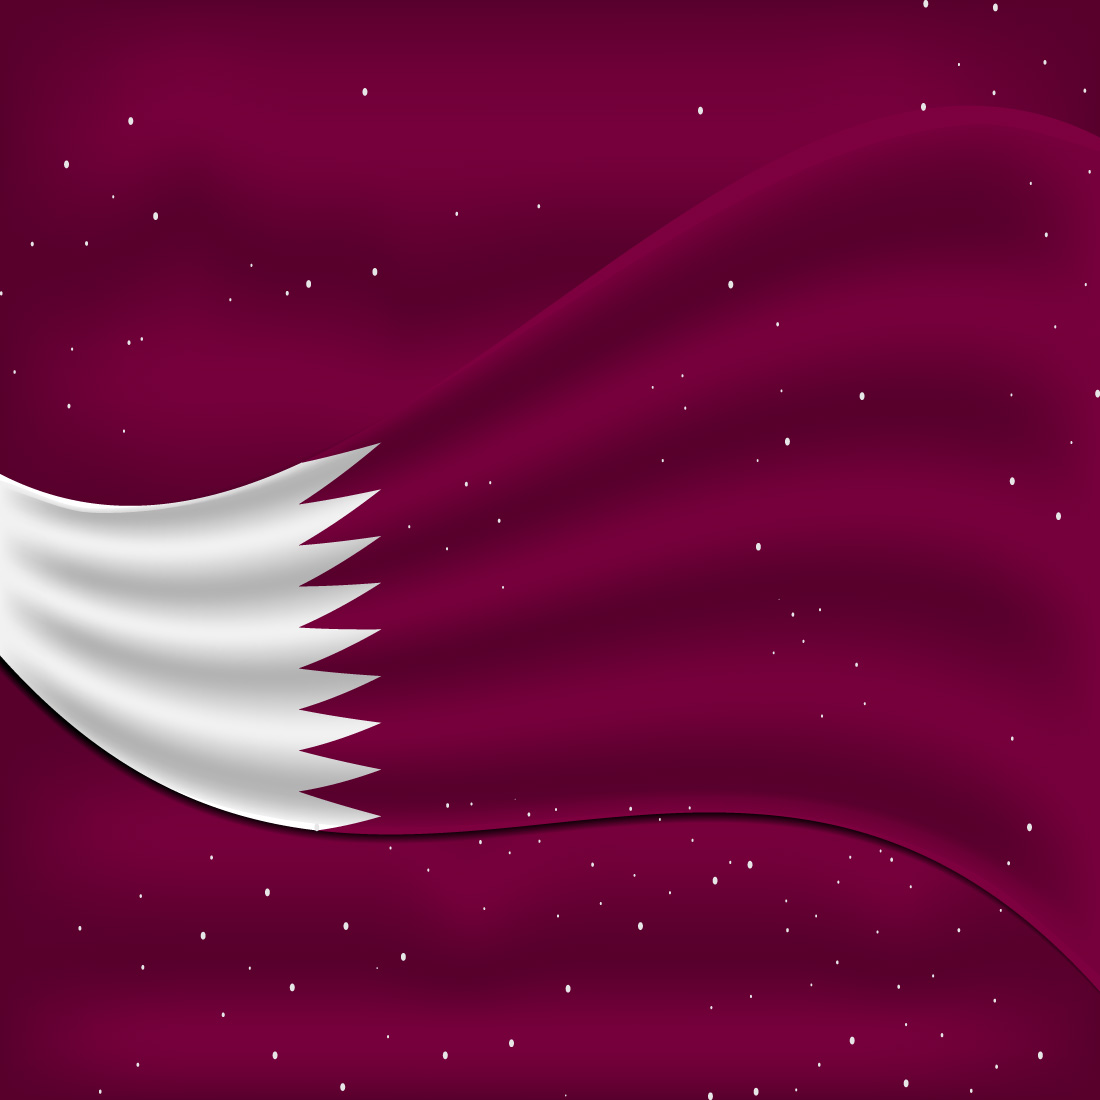 Elegant image of the flag of Qatar.